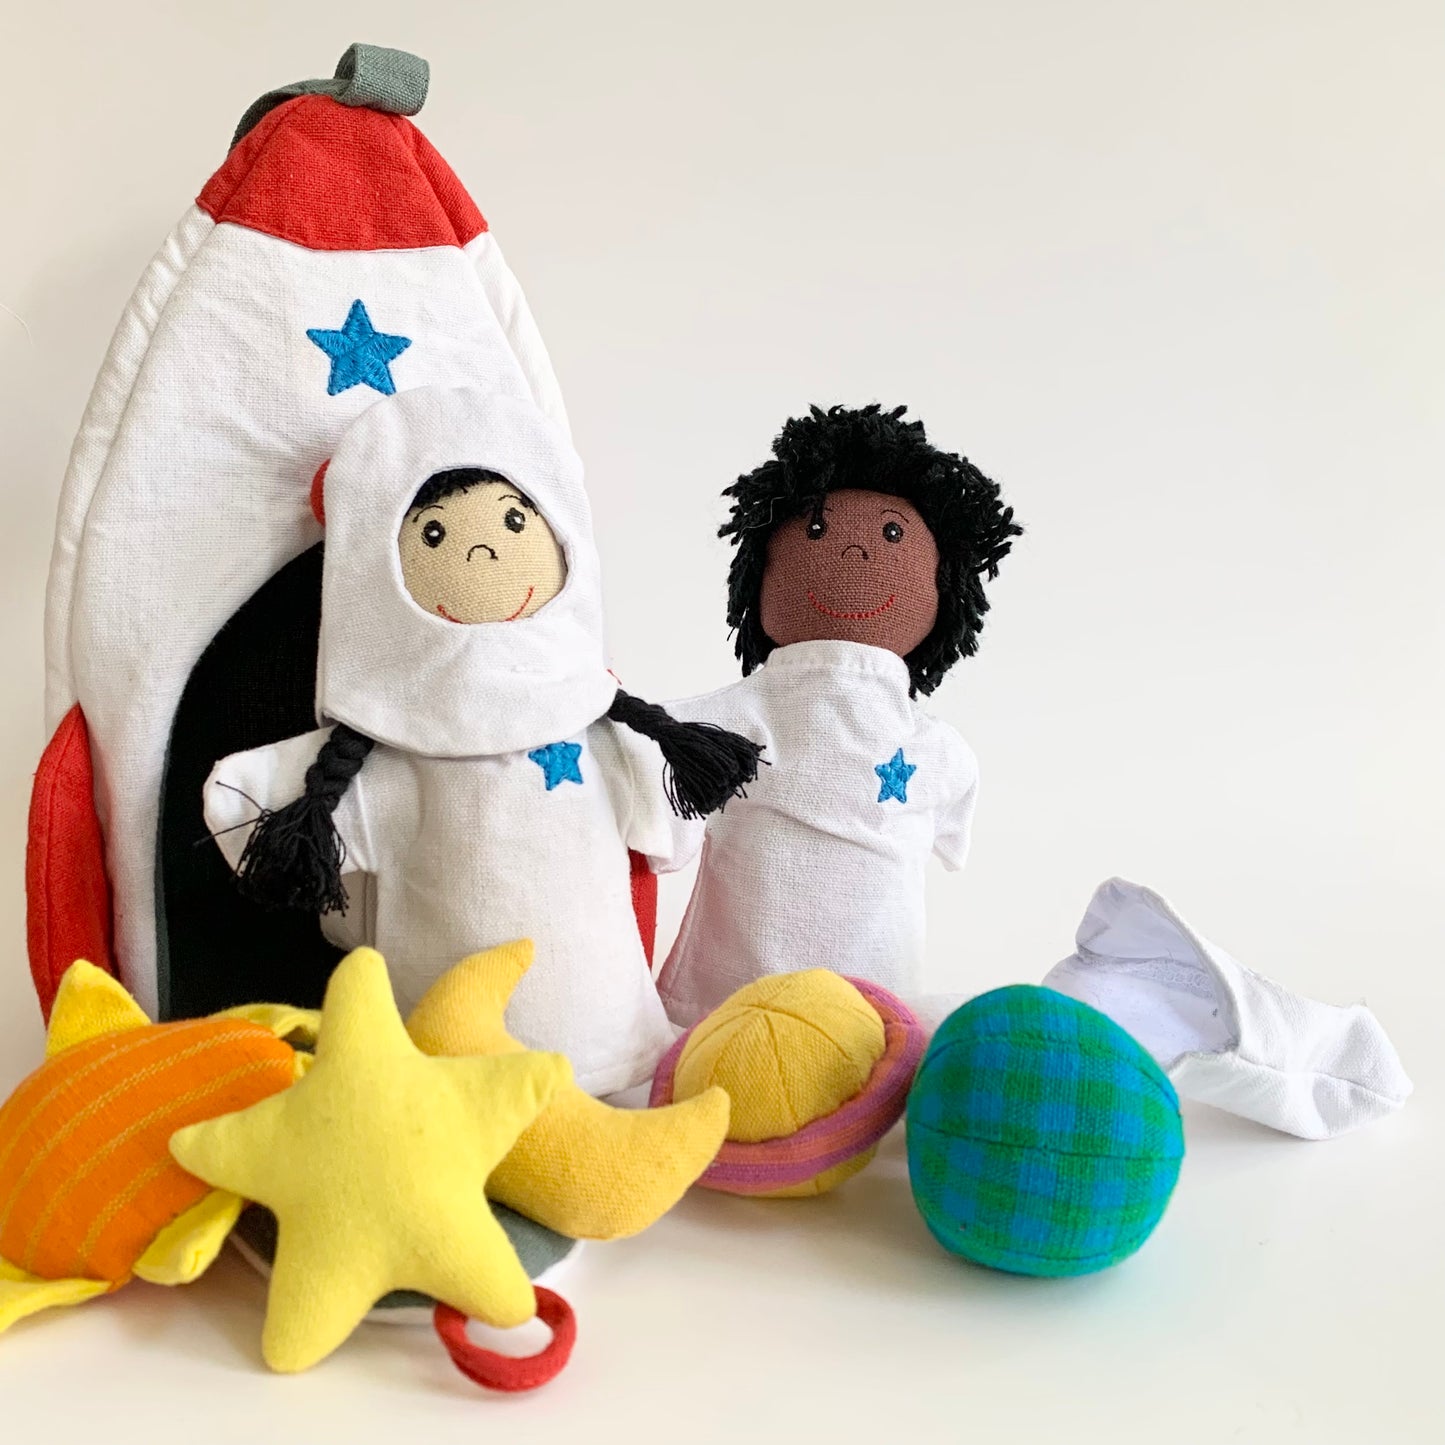 Handmade astronaut dolls and rocket ship